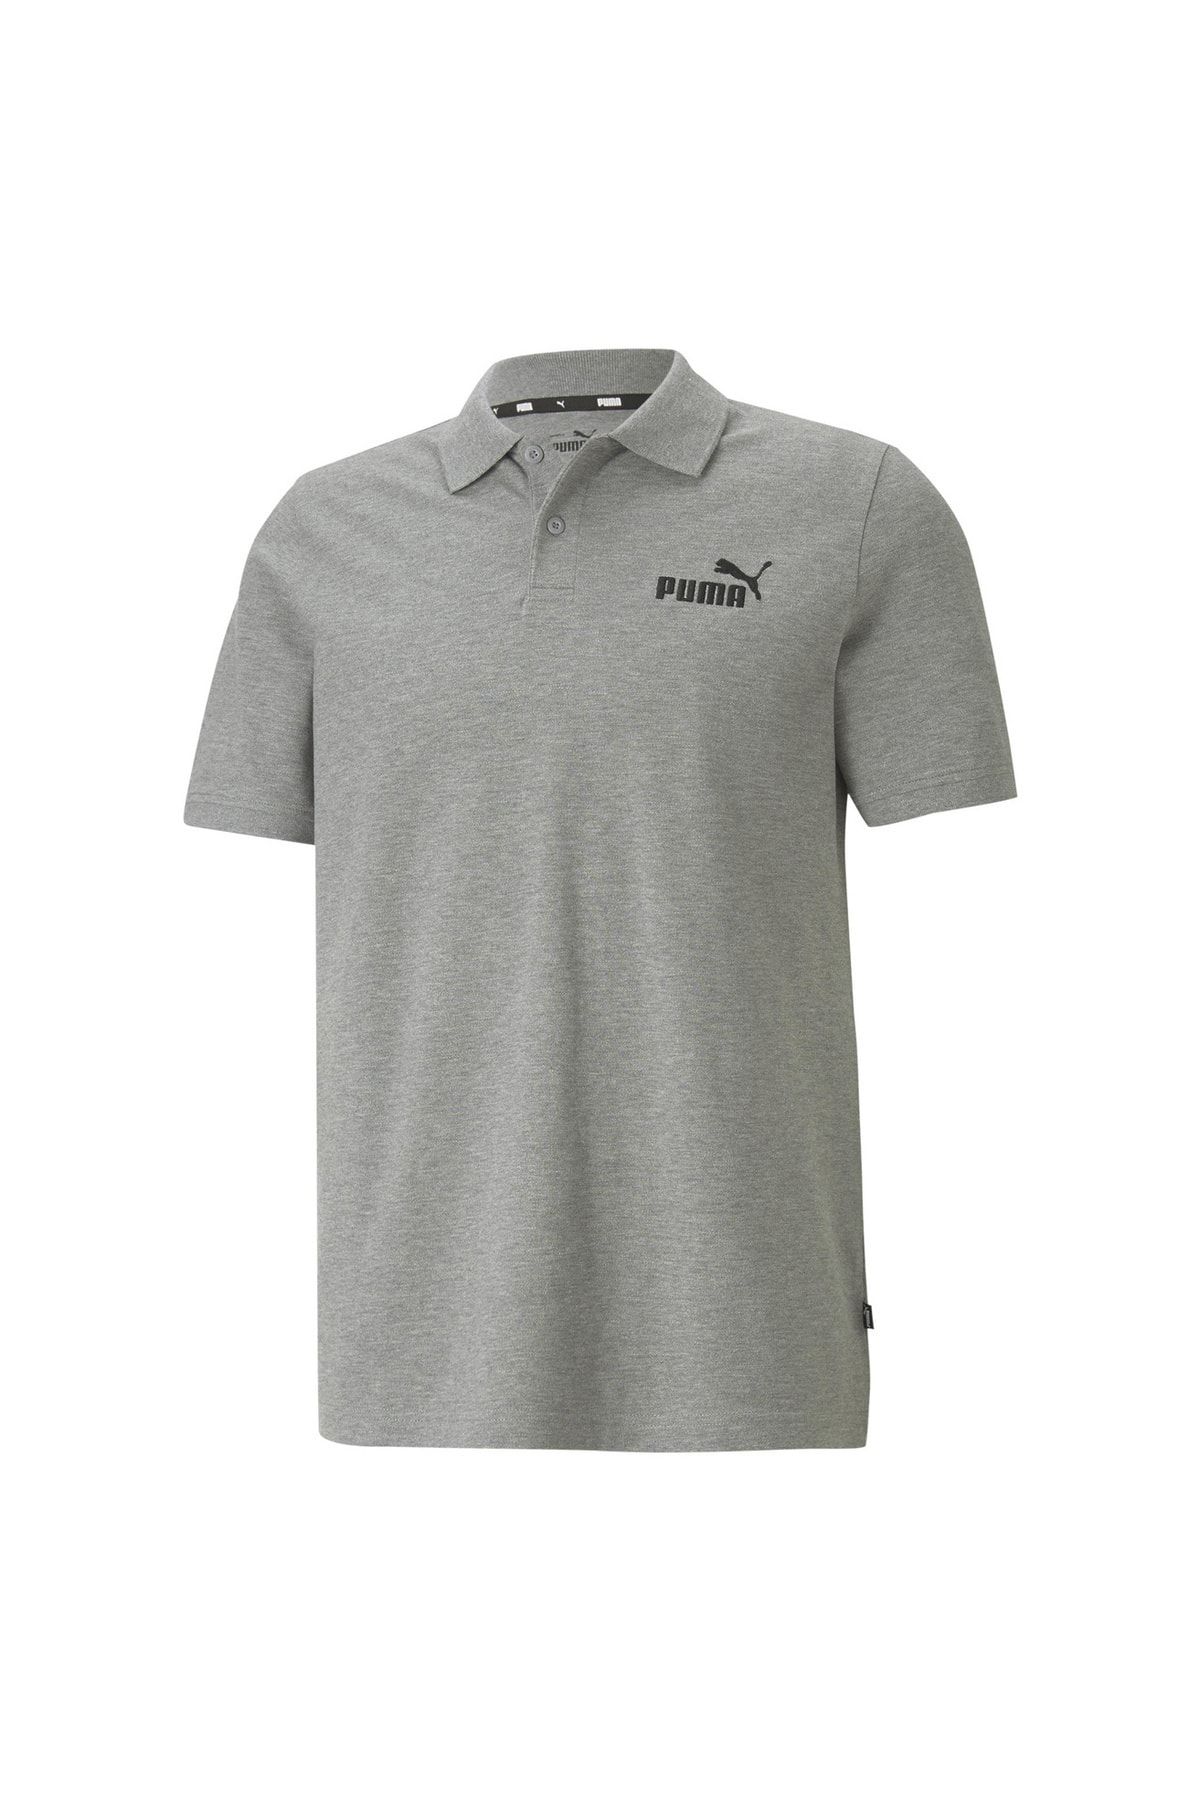 Puma Round Neck Plain Gray Men's T-Shirt 58667403 ESS Pique Polo Medium G -  Trendyol